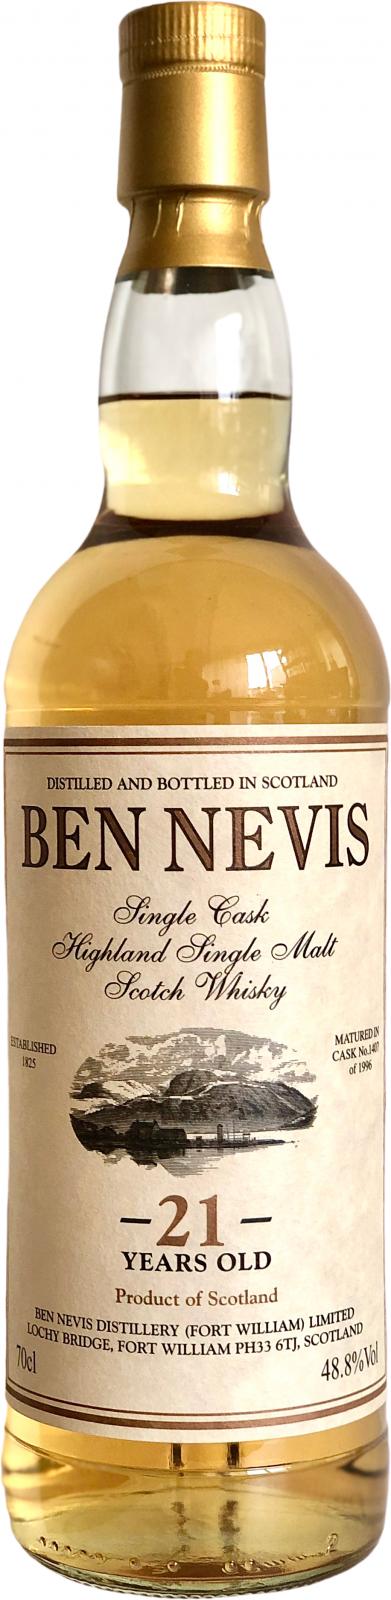 Ben Nevis 1996